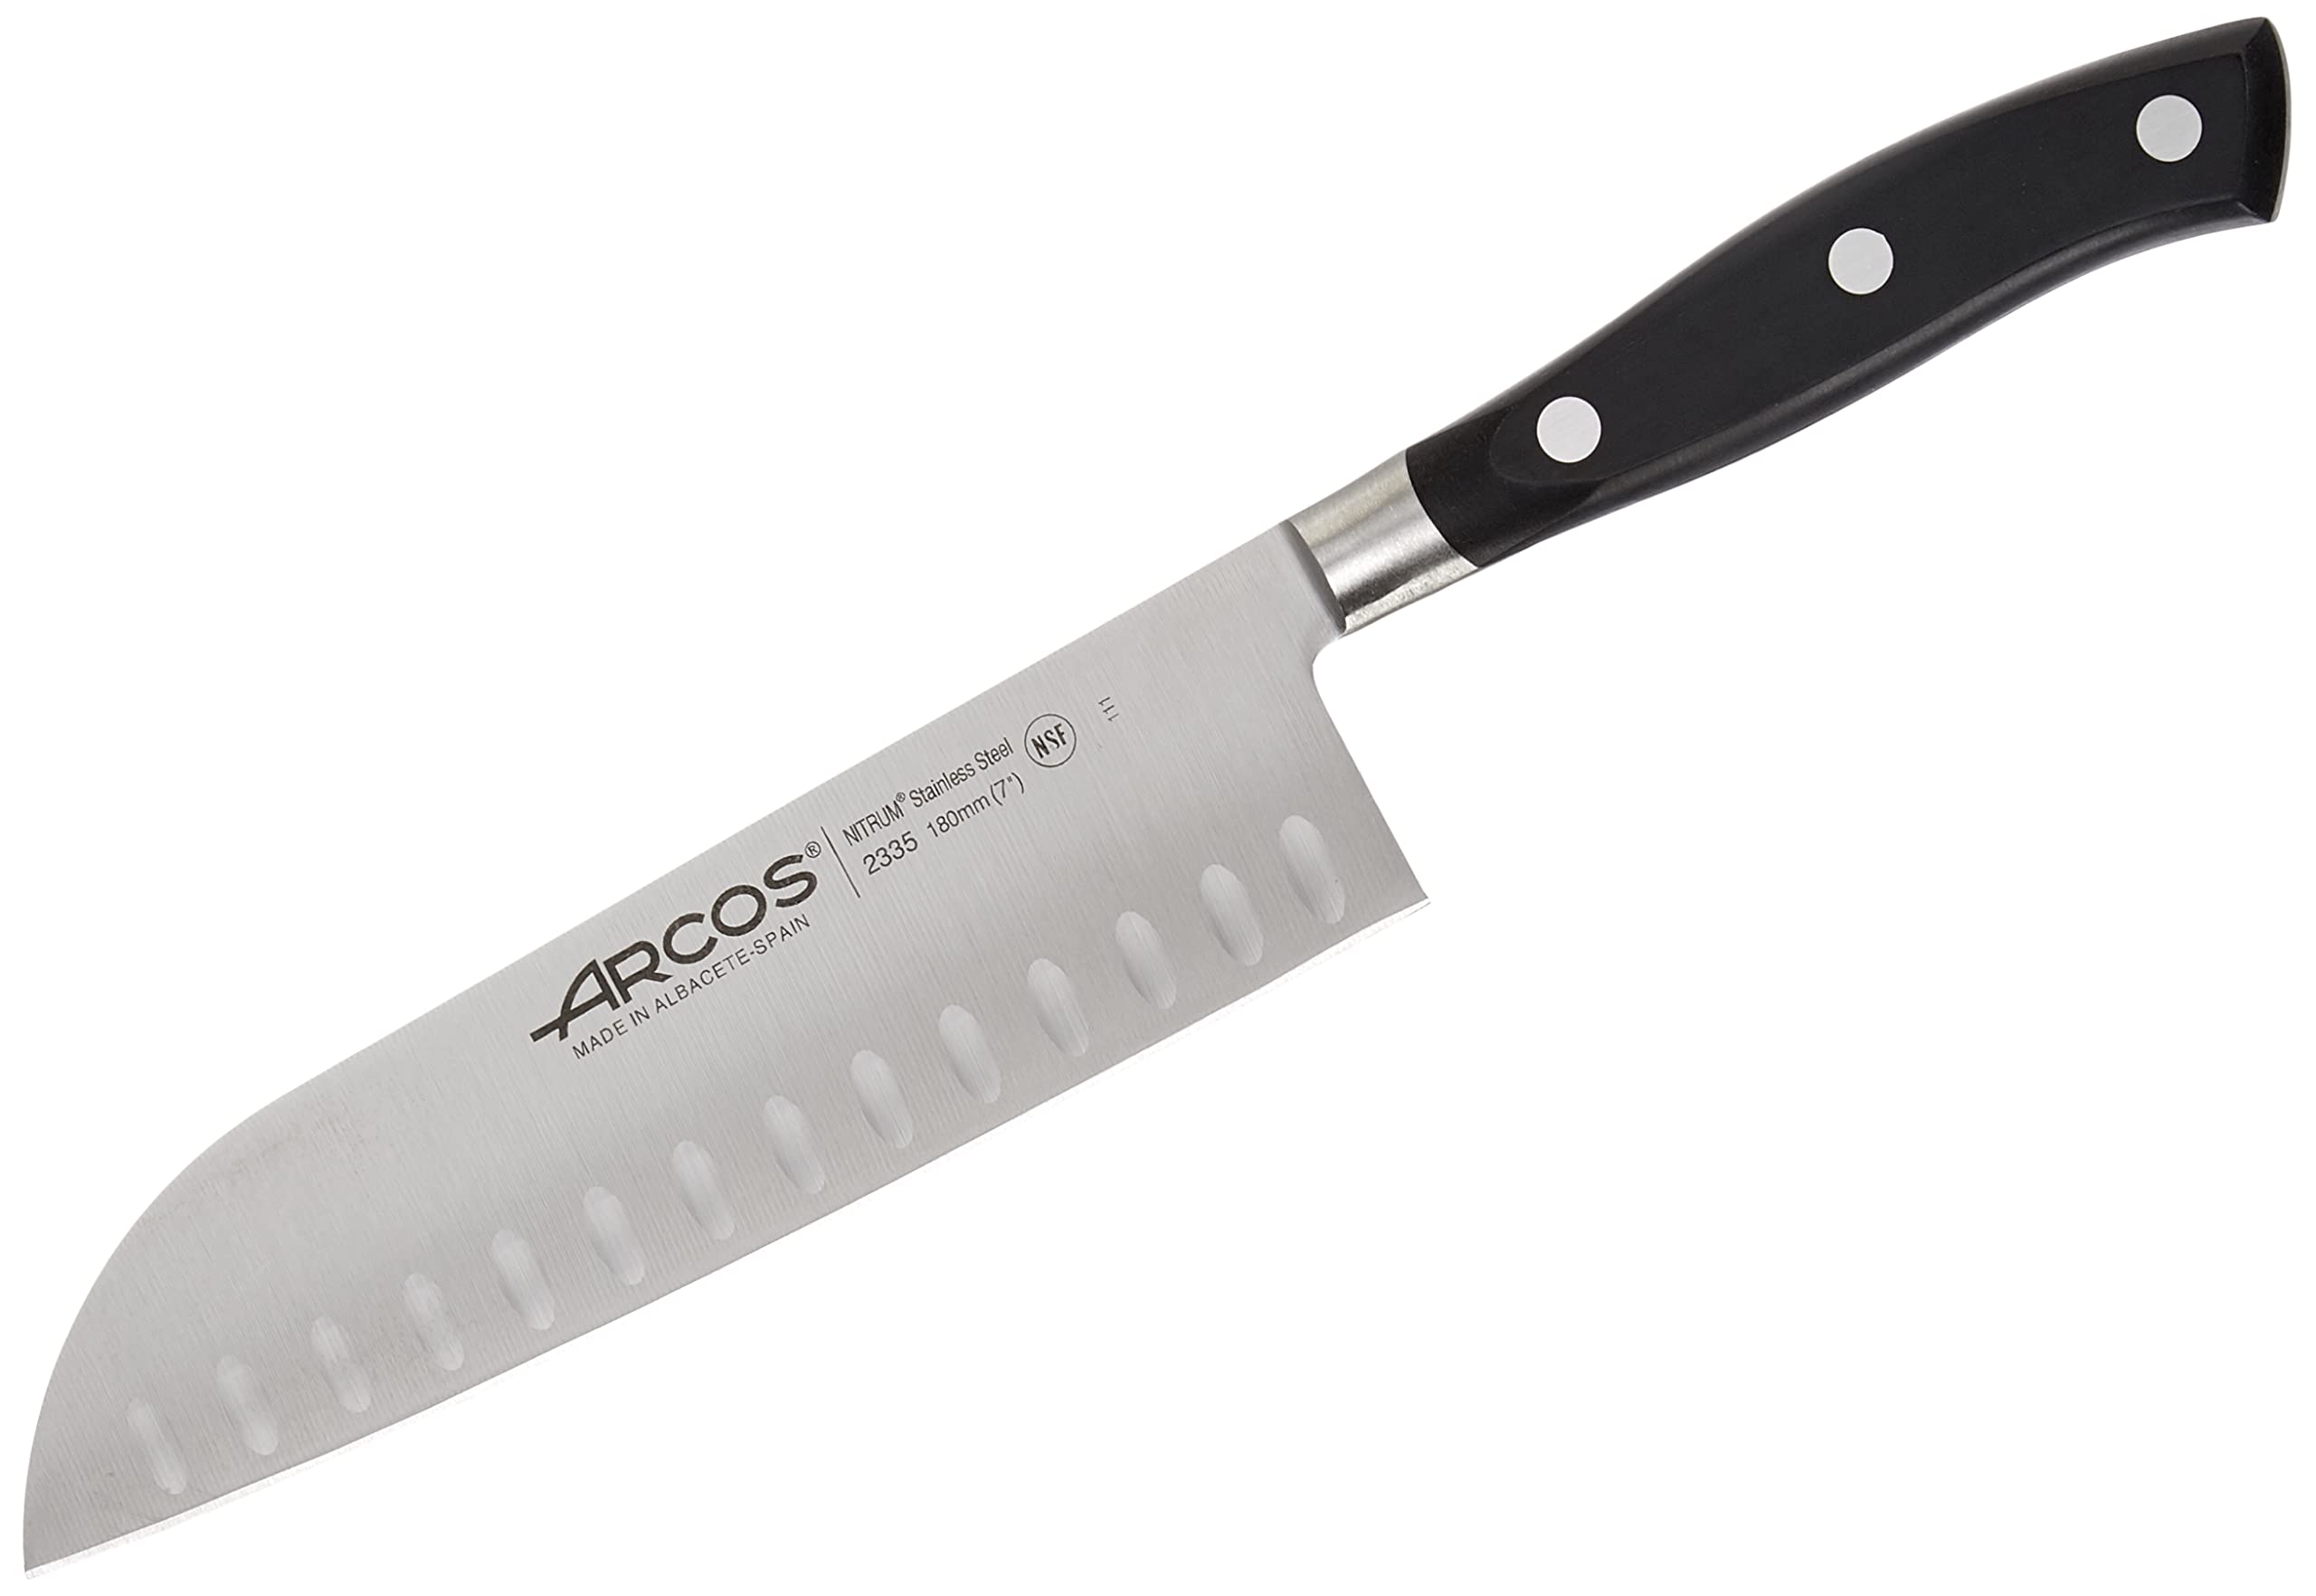 Arcos 233500 Serie Riviera - Santoku Messer MesserAsiatischerArt-KlingeausNitrumgeschmiedetemEdelstahl180mm-HandGriffPolyoxymethylen(POM)FarbeSchwarz